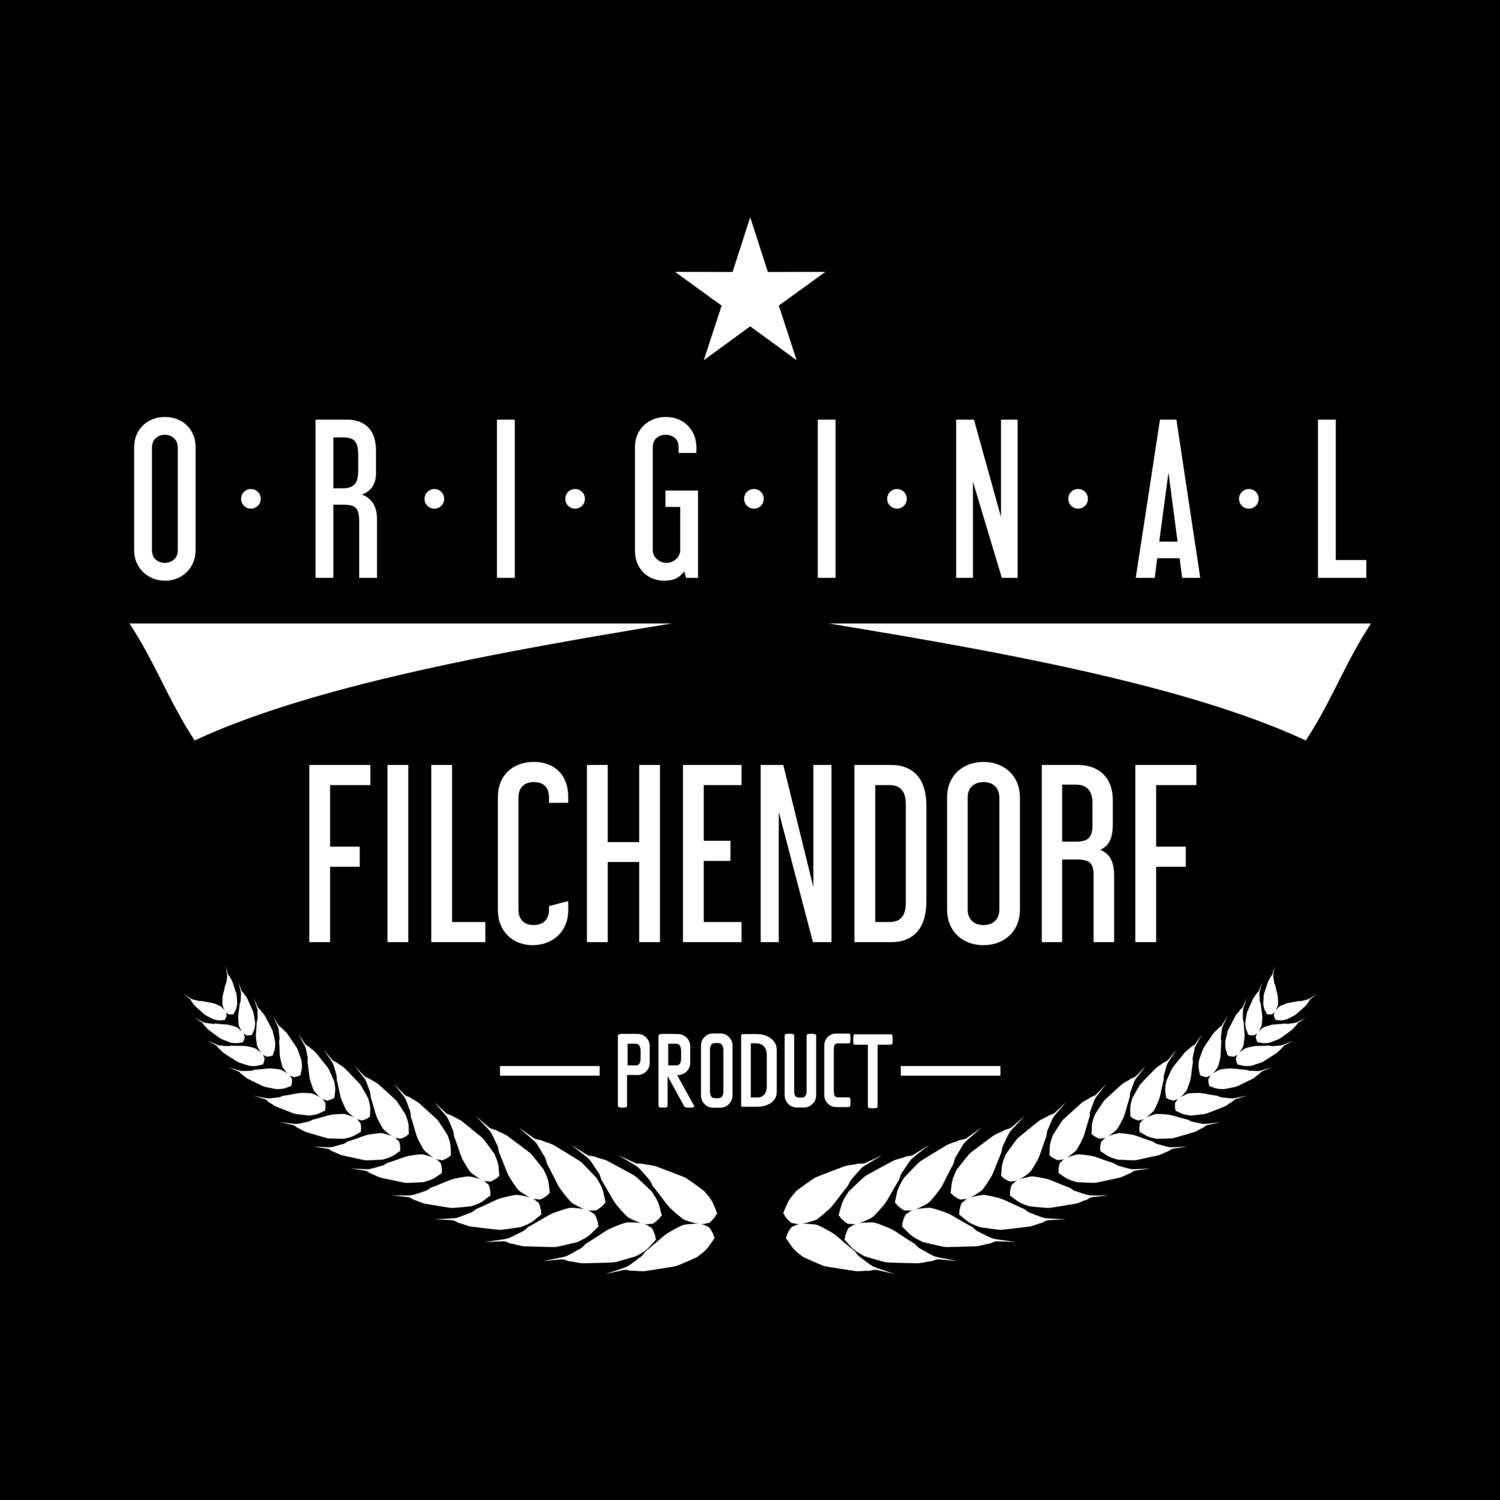 Filchendorf T-Shirt »Original Product«